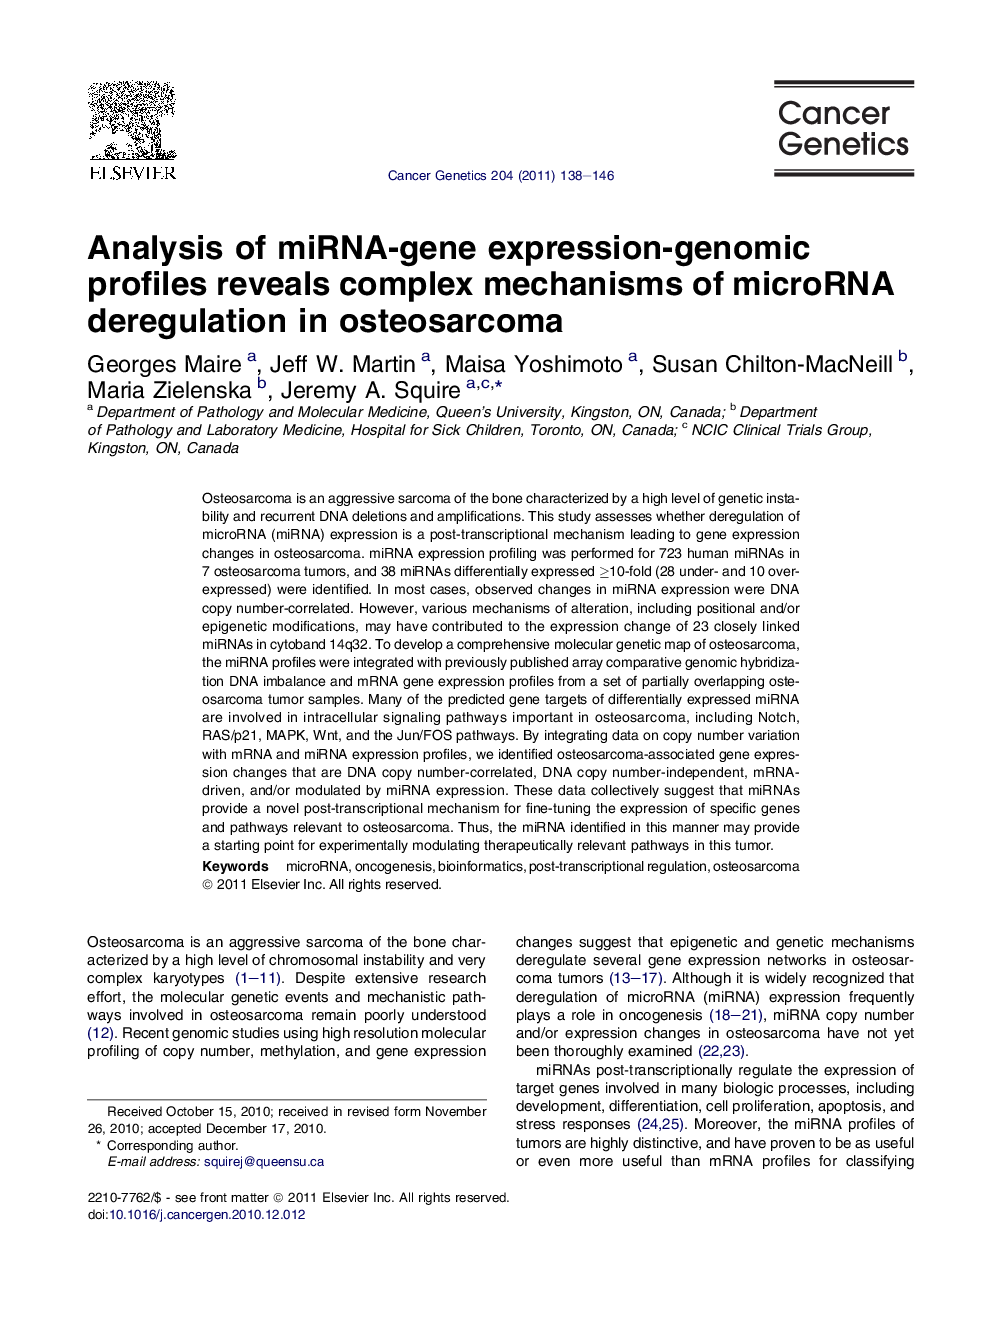 Analysis of miRNA-gene expression-genomic profiles reveals complex mechanisms of microRNA deregulation in osteosarcoma